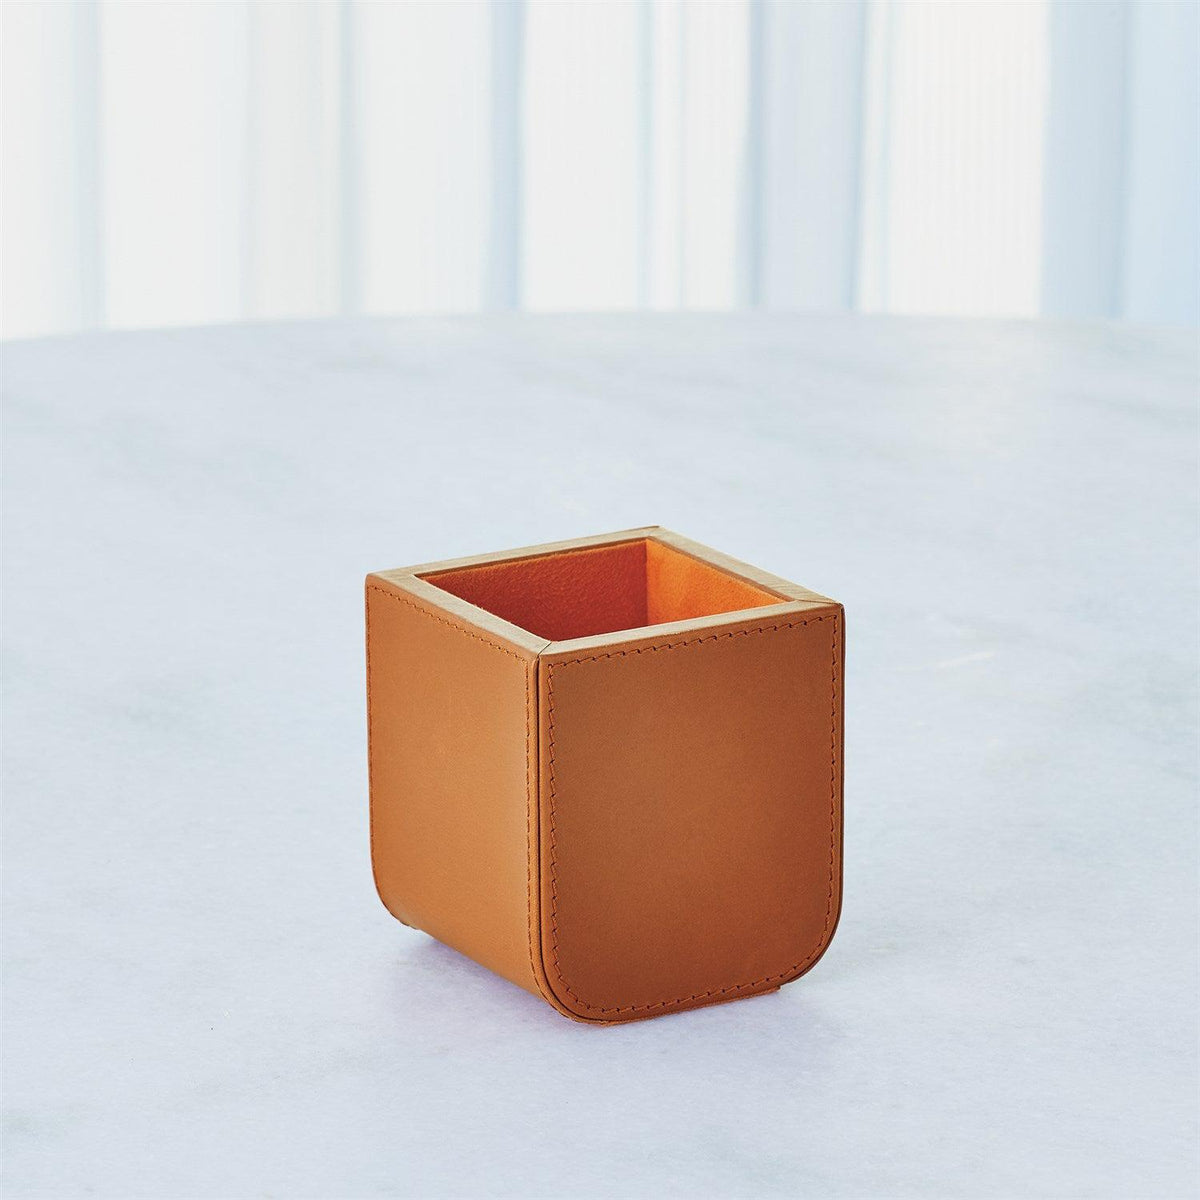 Radius Edge Leather Desk - Orange-Global Views-Office Accessories-Artistic Elements